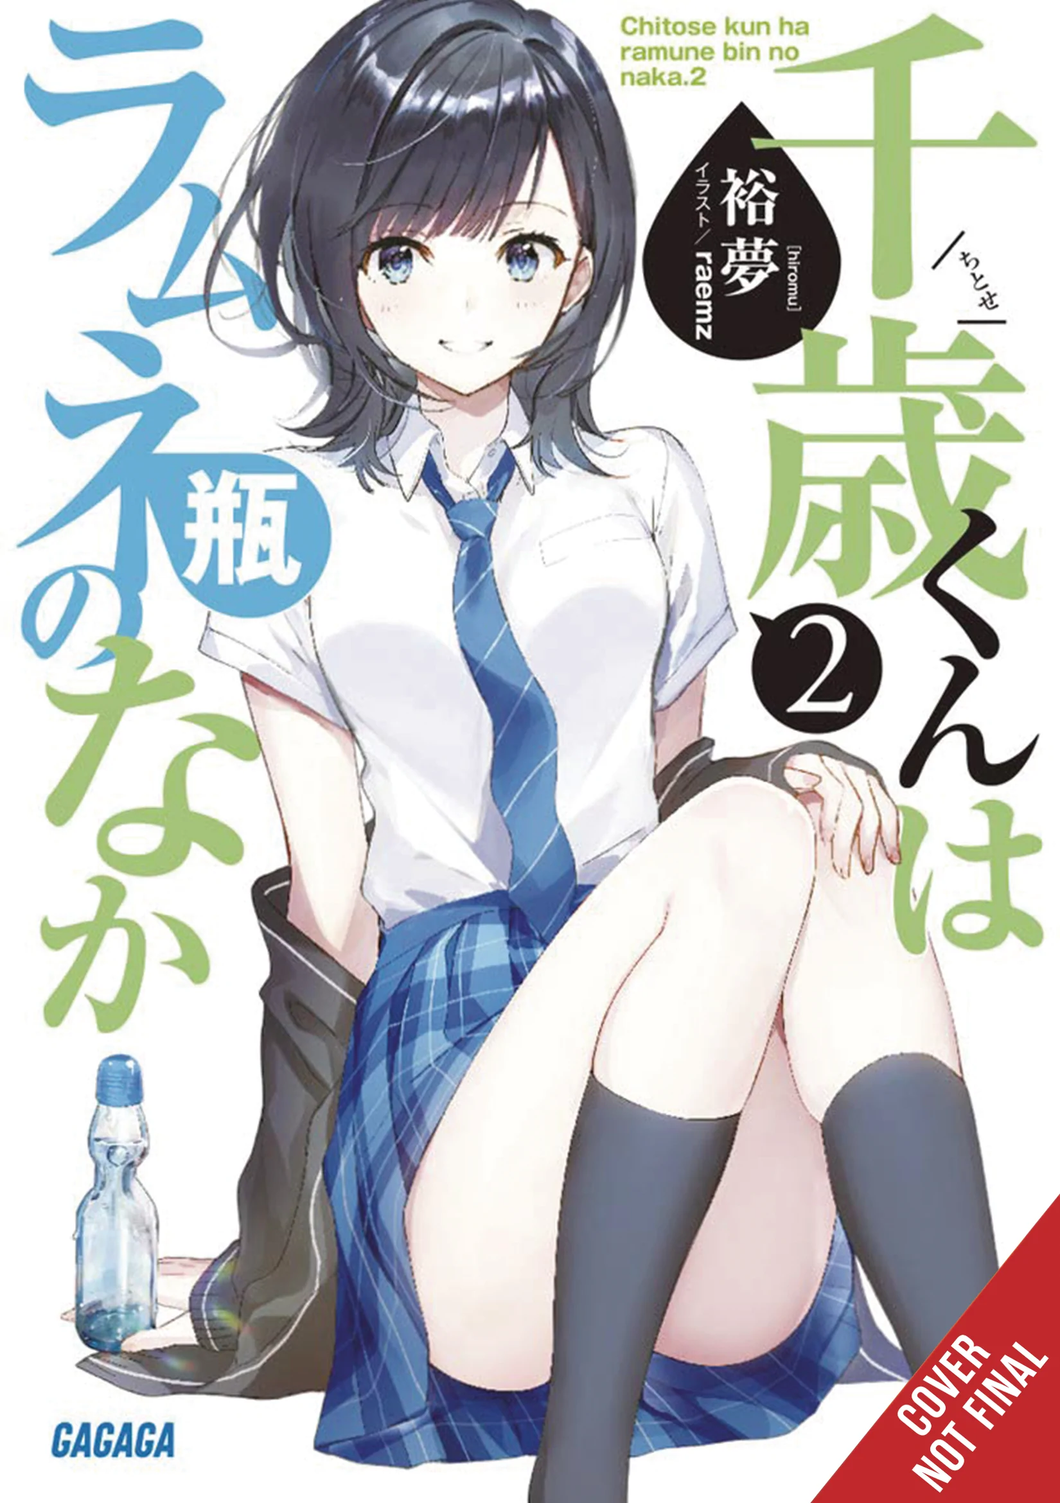 Chitose is in Ramune Bottle Light Novel SC Vol 02